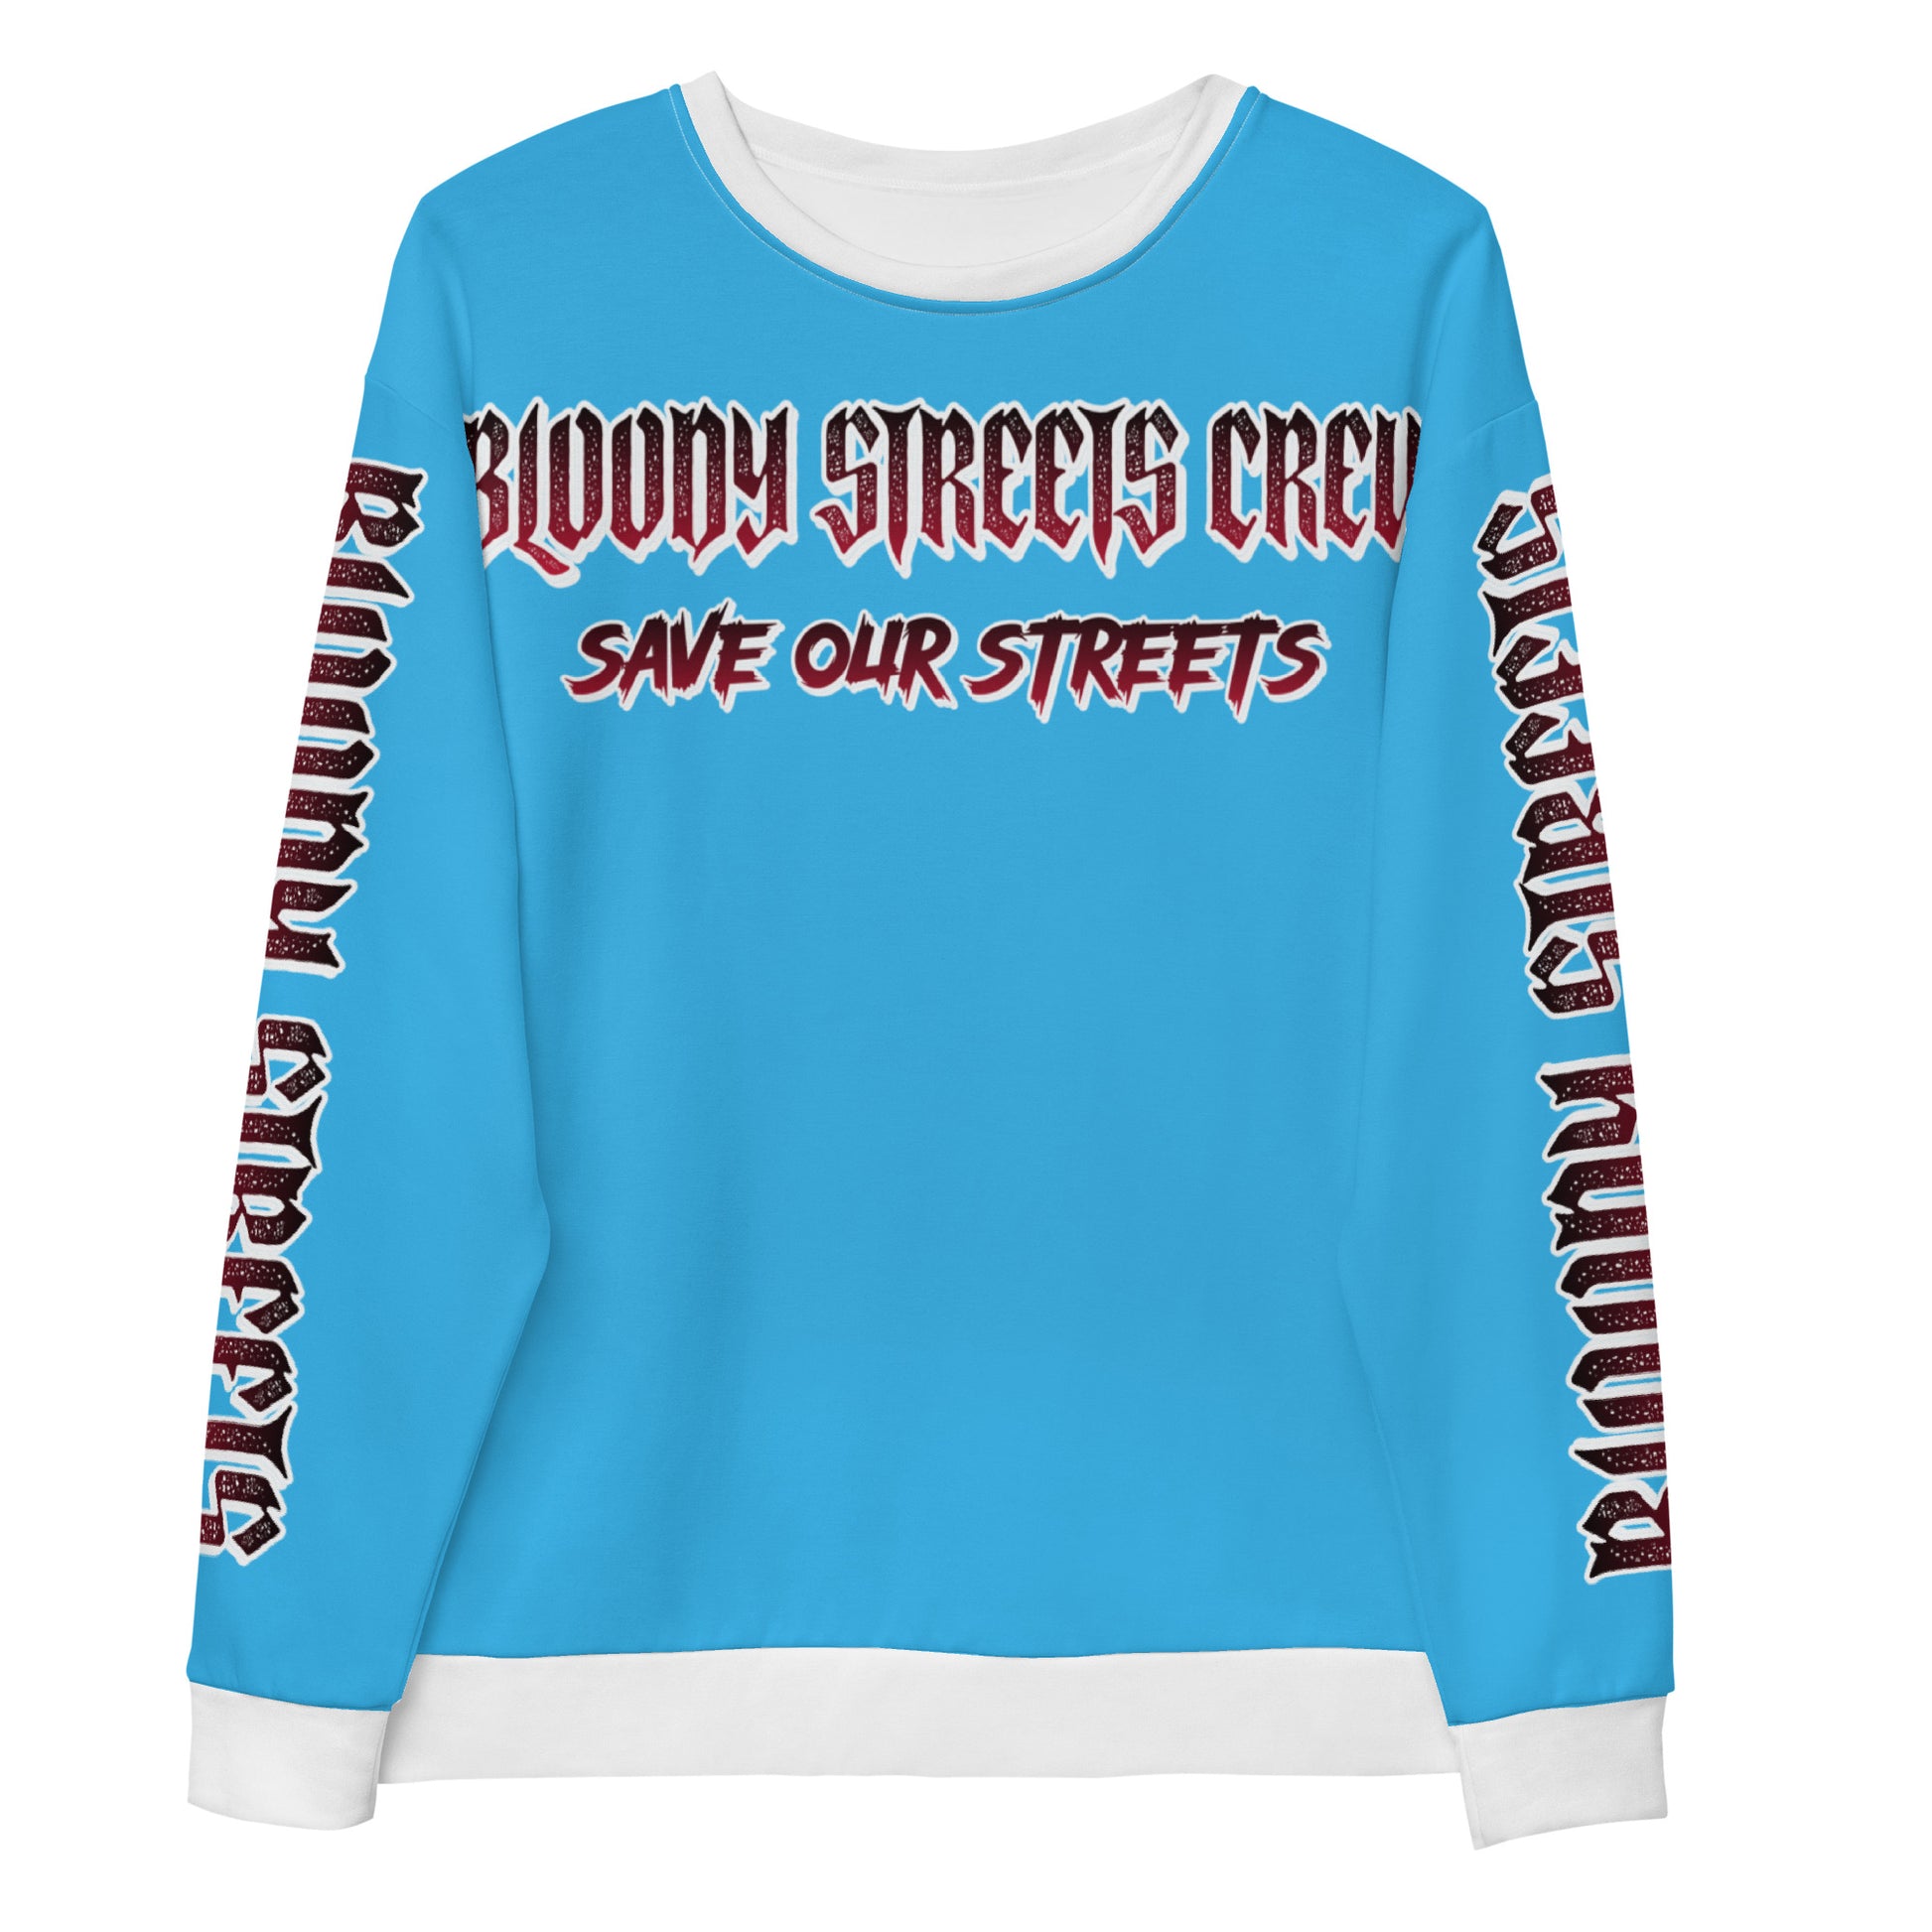 Bloody Streets Crew Member Streetwear Pullover Blue - BLOODY-STREETS.DE Streetwear Herren und Damen Hoodies, T-Shirts, Pullis